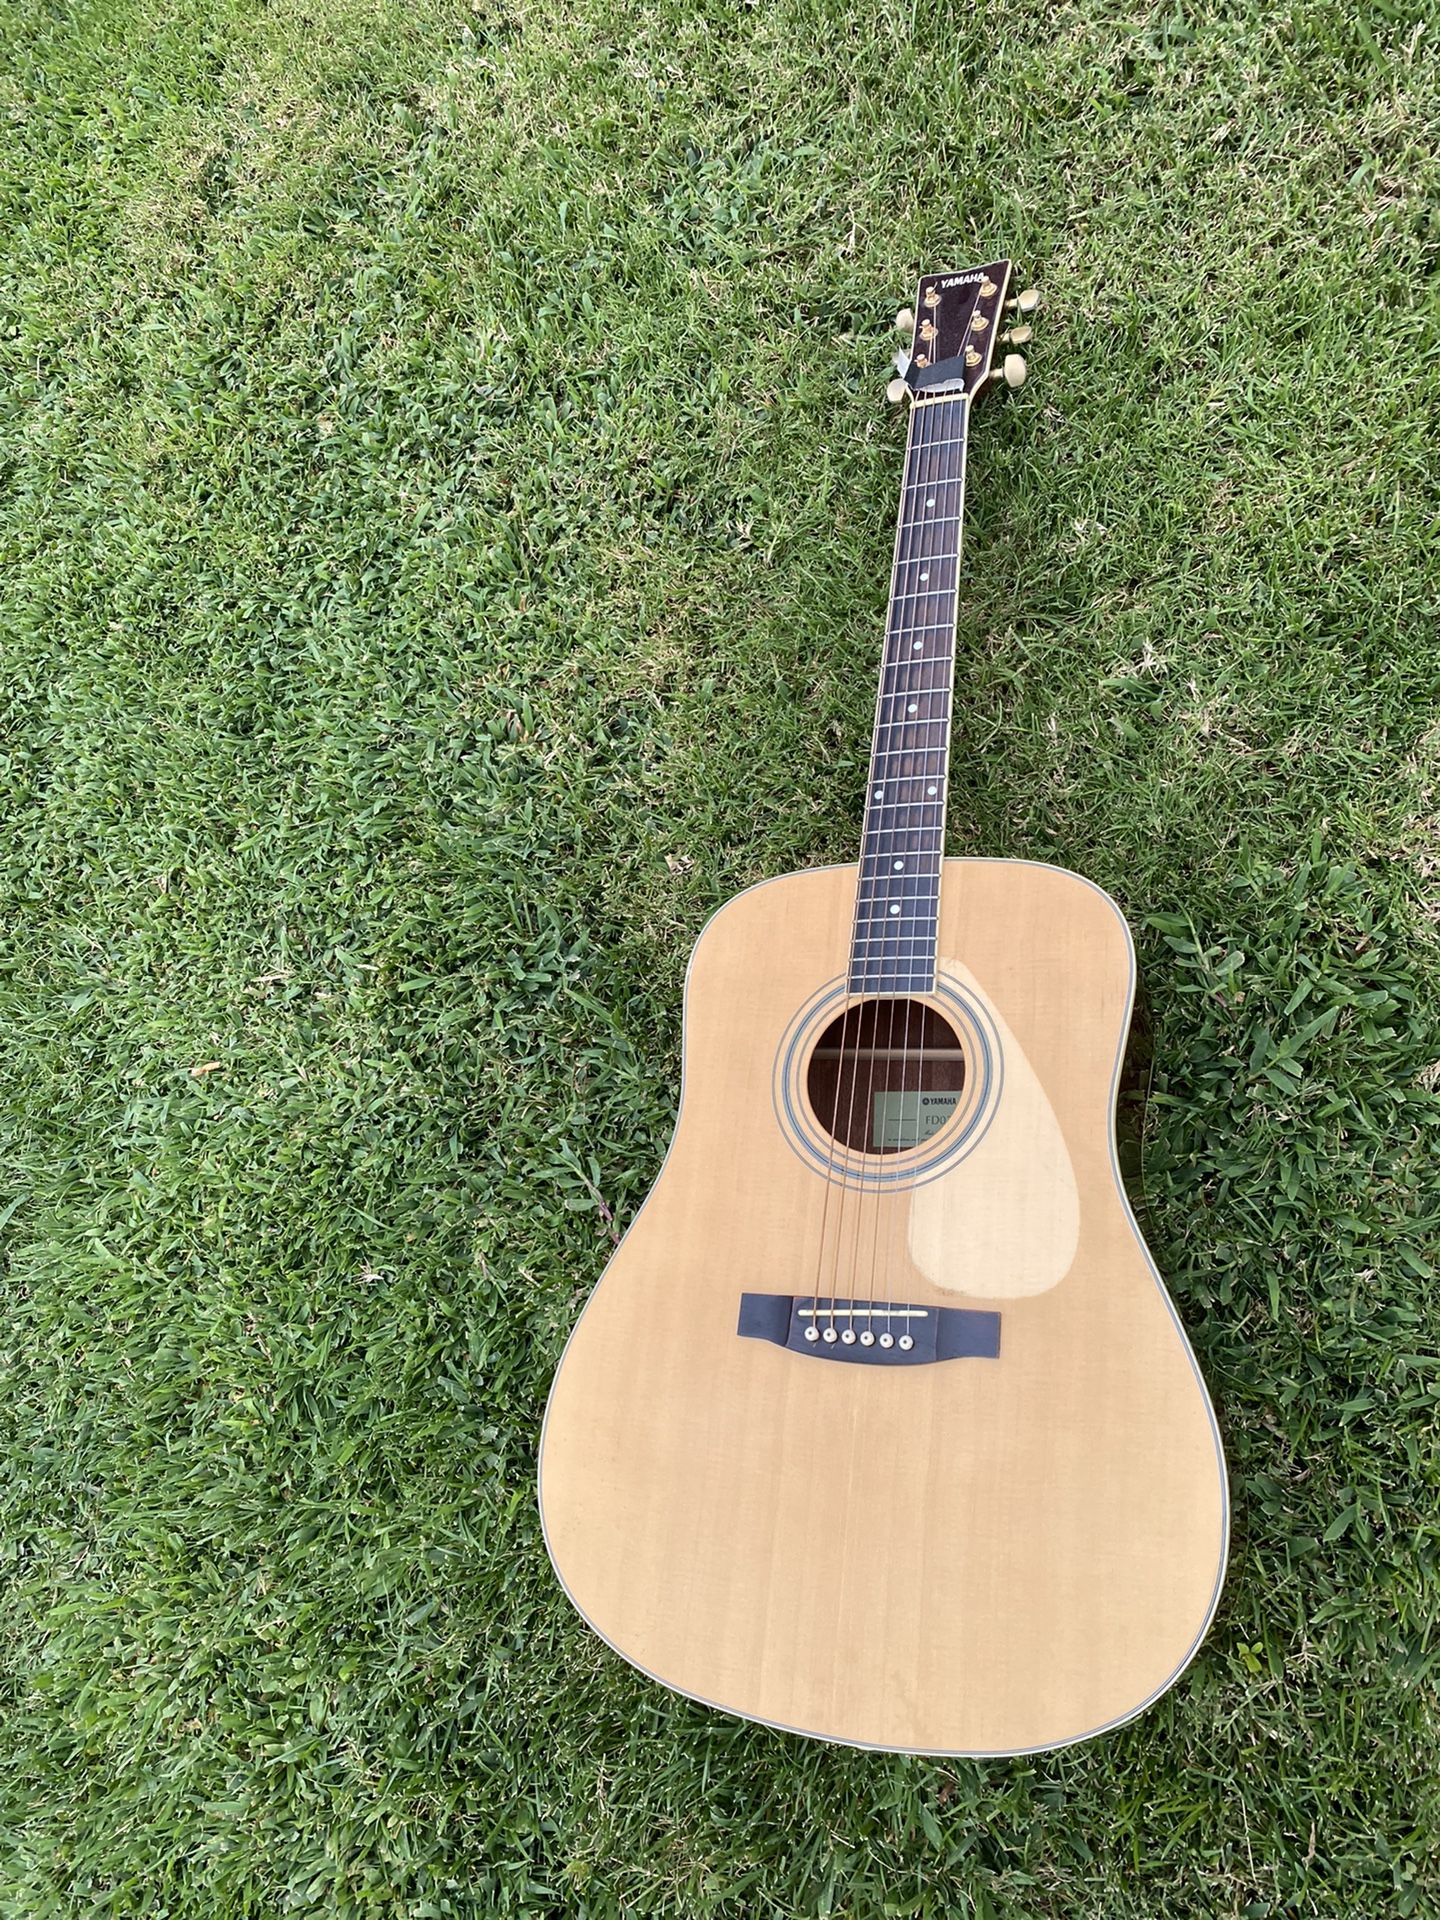 Yamaha Fg02 Acoustic Guitar